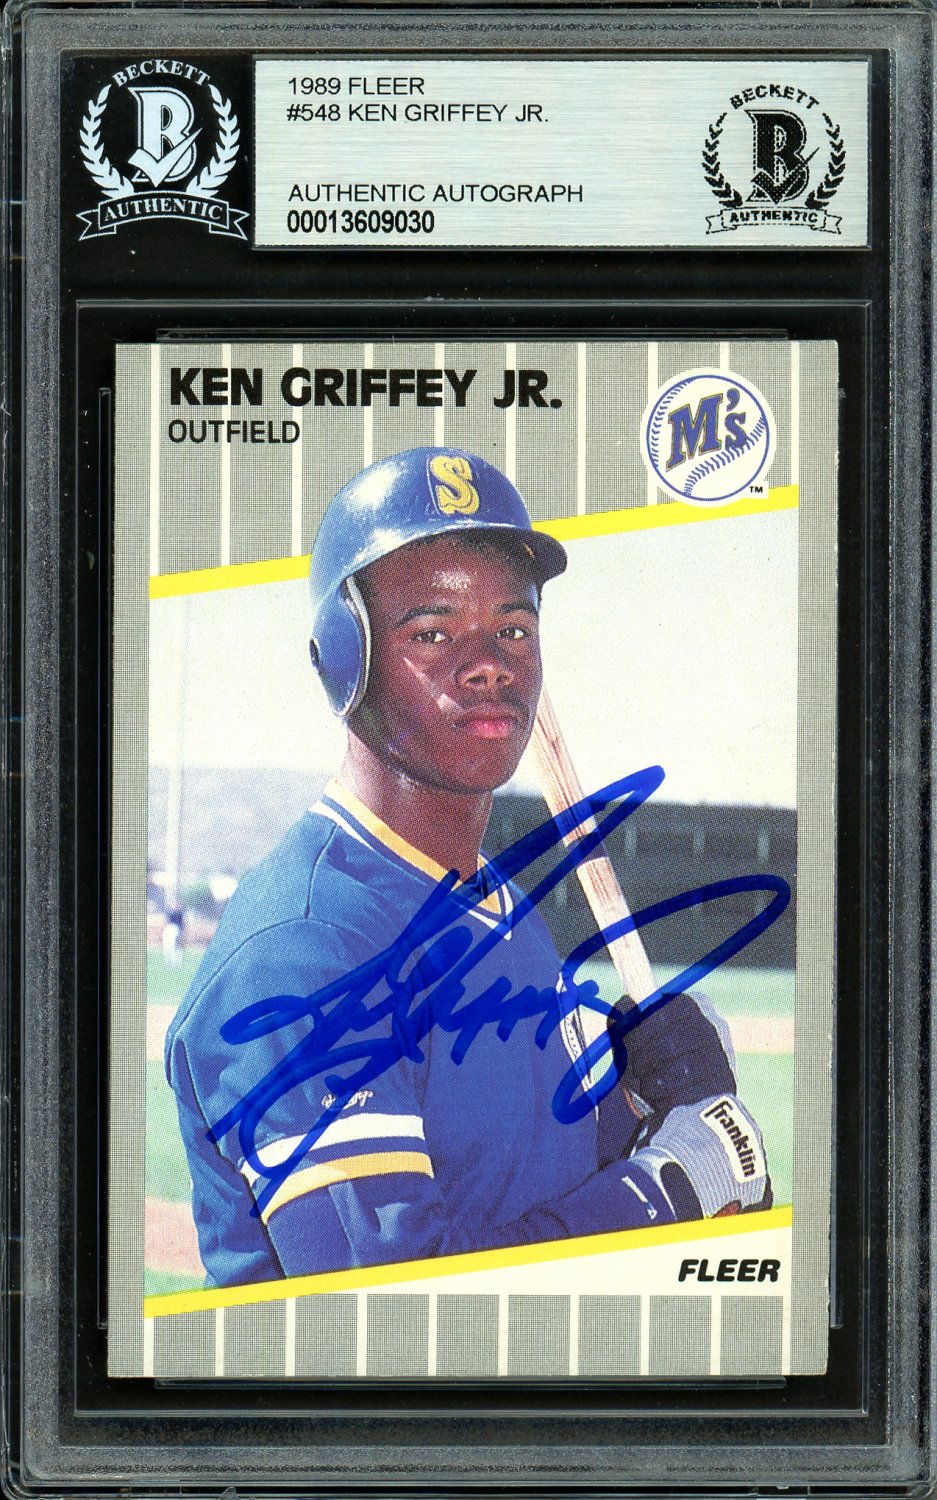 Ken Griffey, Jr. Autographed Signed . 1989 Fleer Rookie Card #548